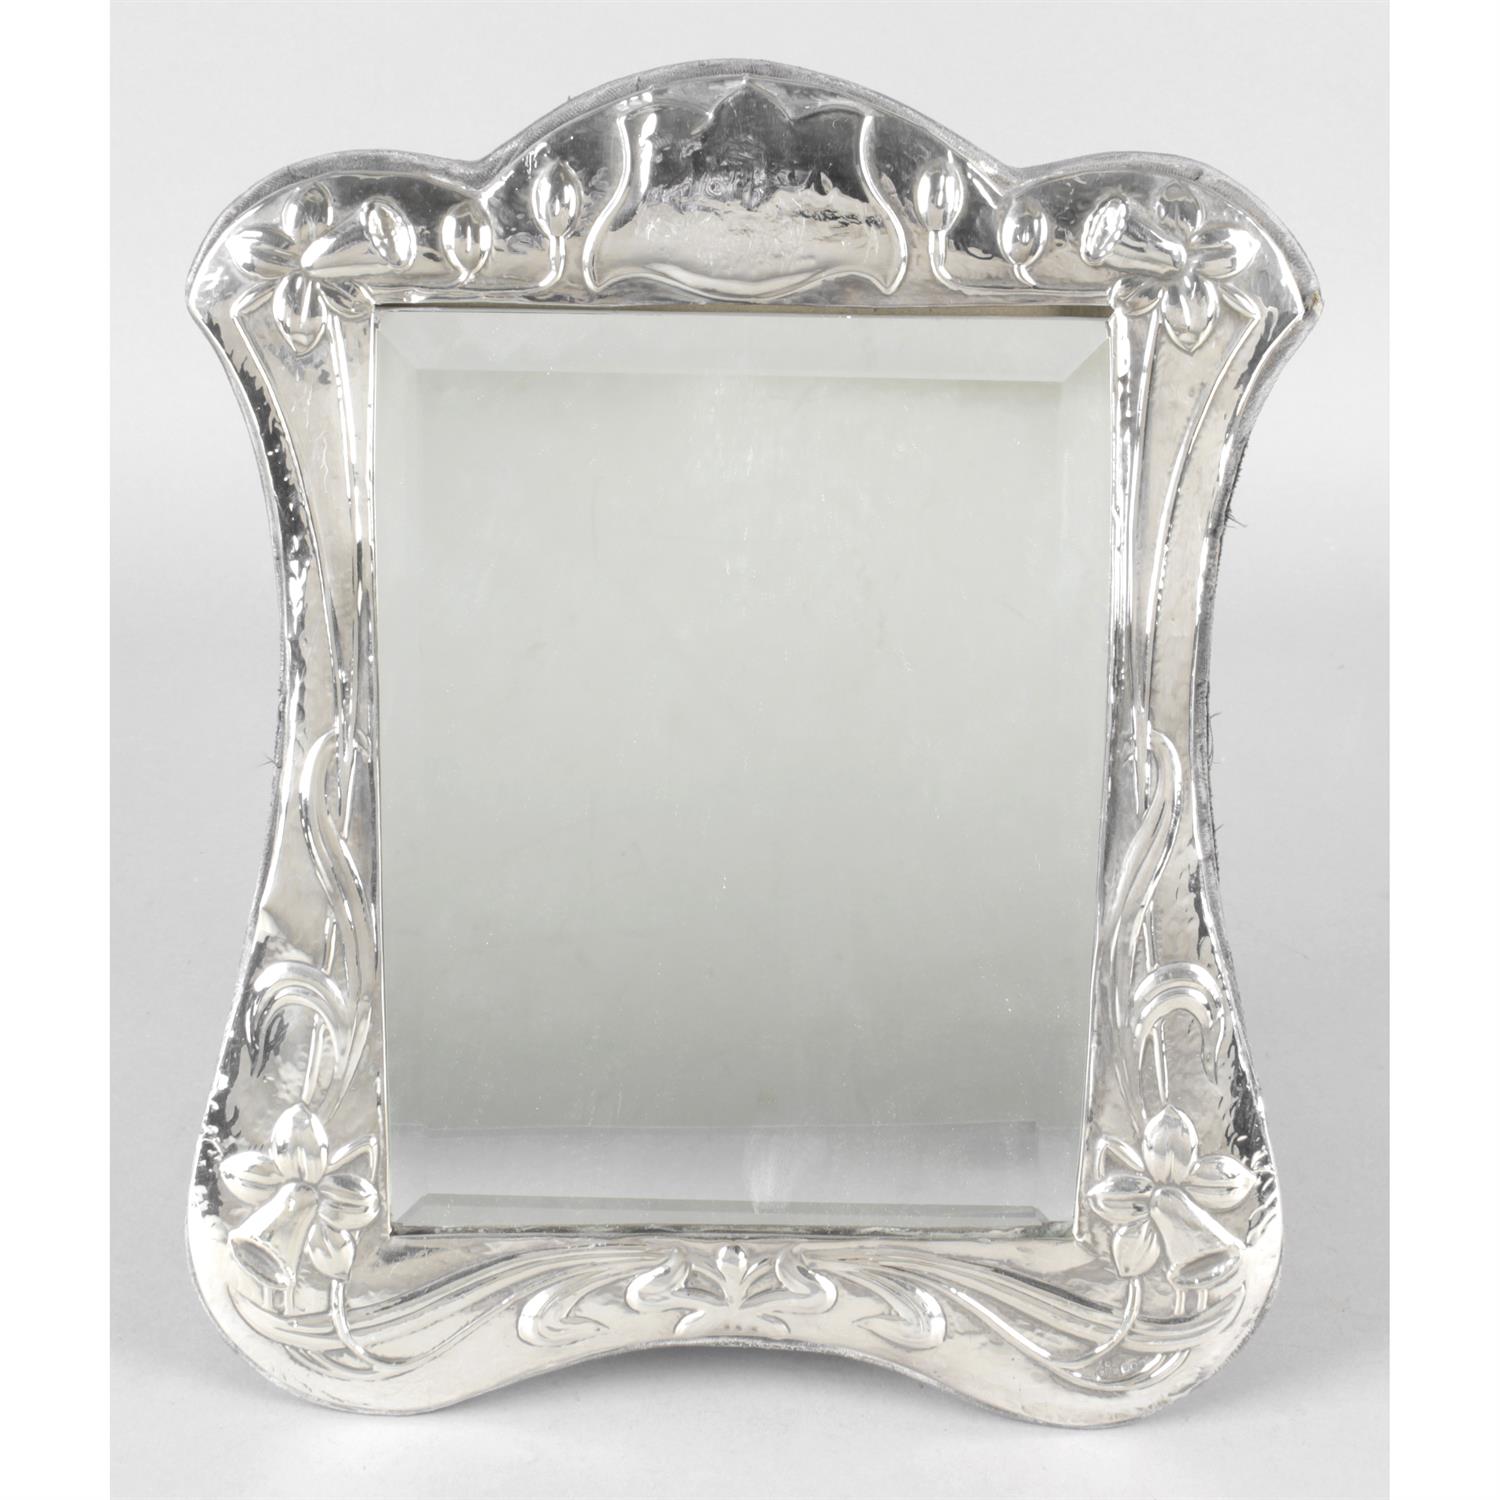 A modern Britannia silver mounted mirror with Art Nouveau style decoration.